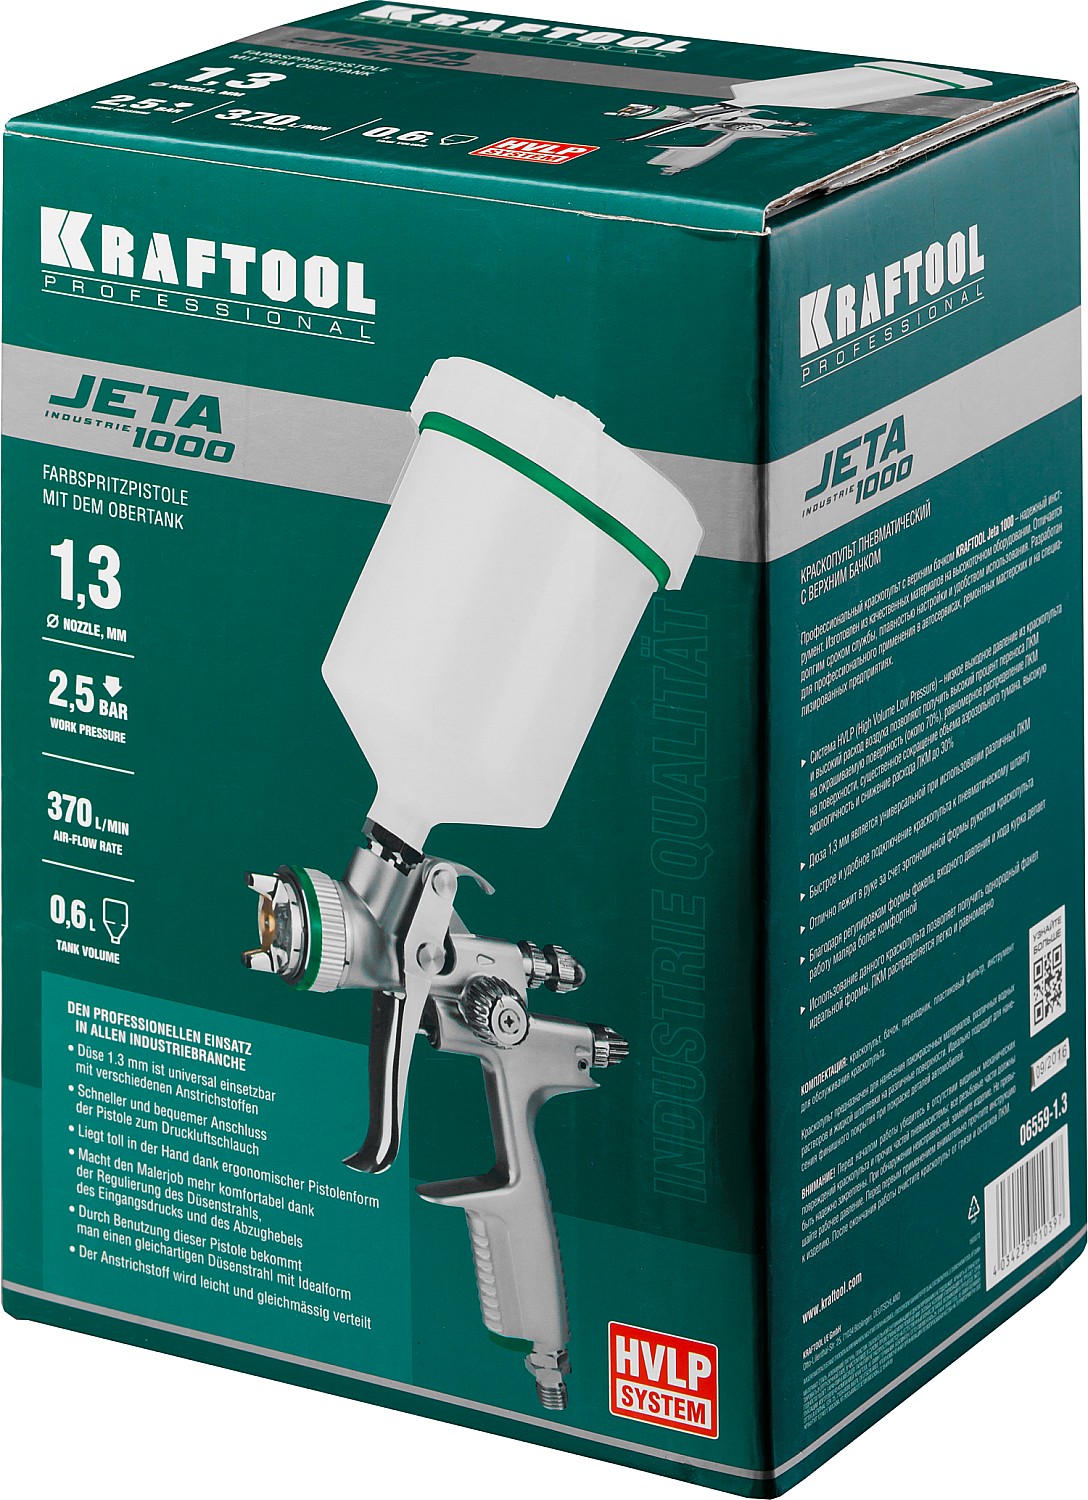 KRAFTOOL JETA 1000, HVLP, 1.3 мм, пневматический краскопульт с верхним бачком (06559-1.3)